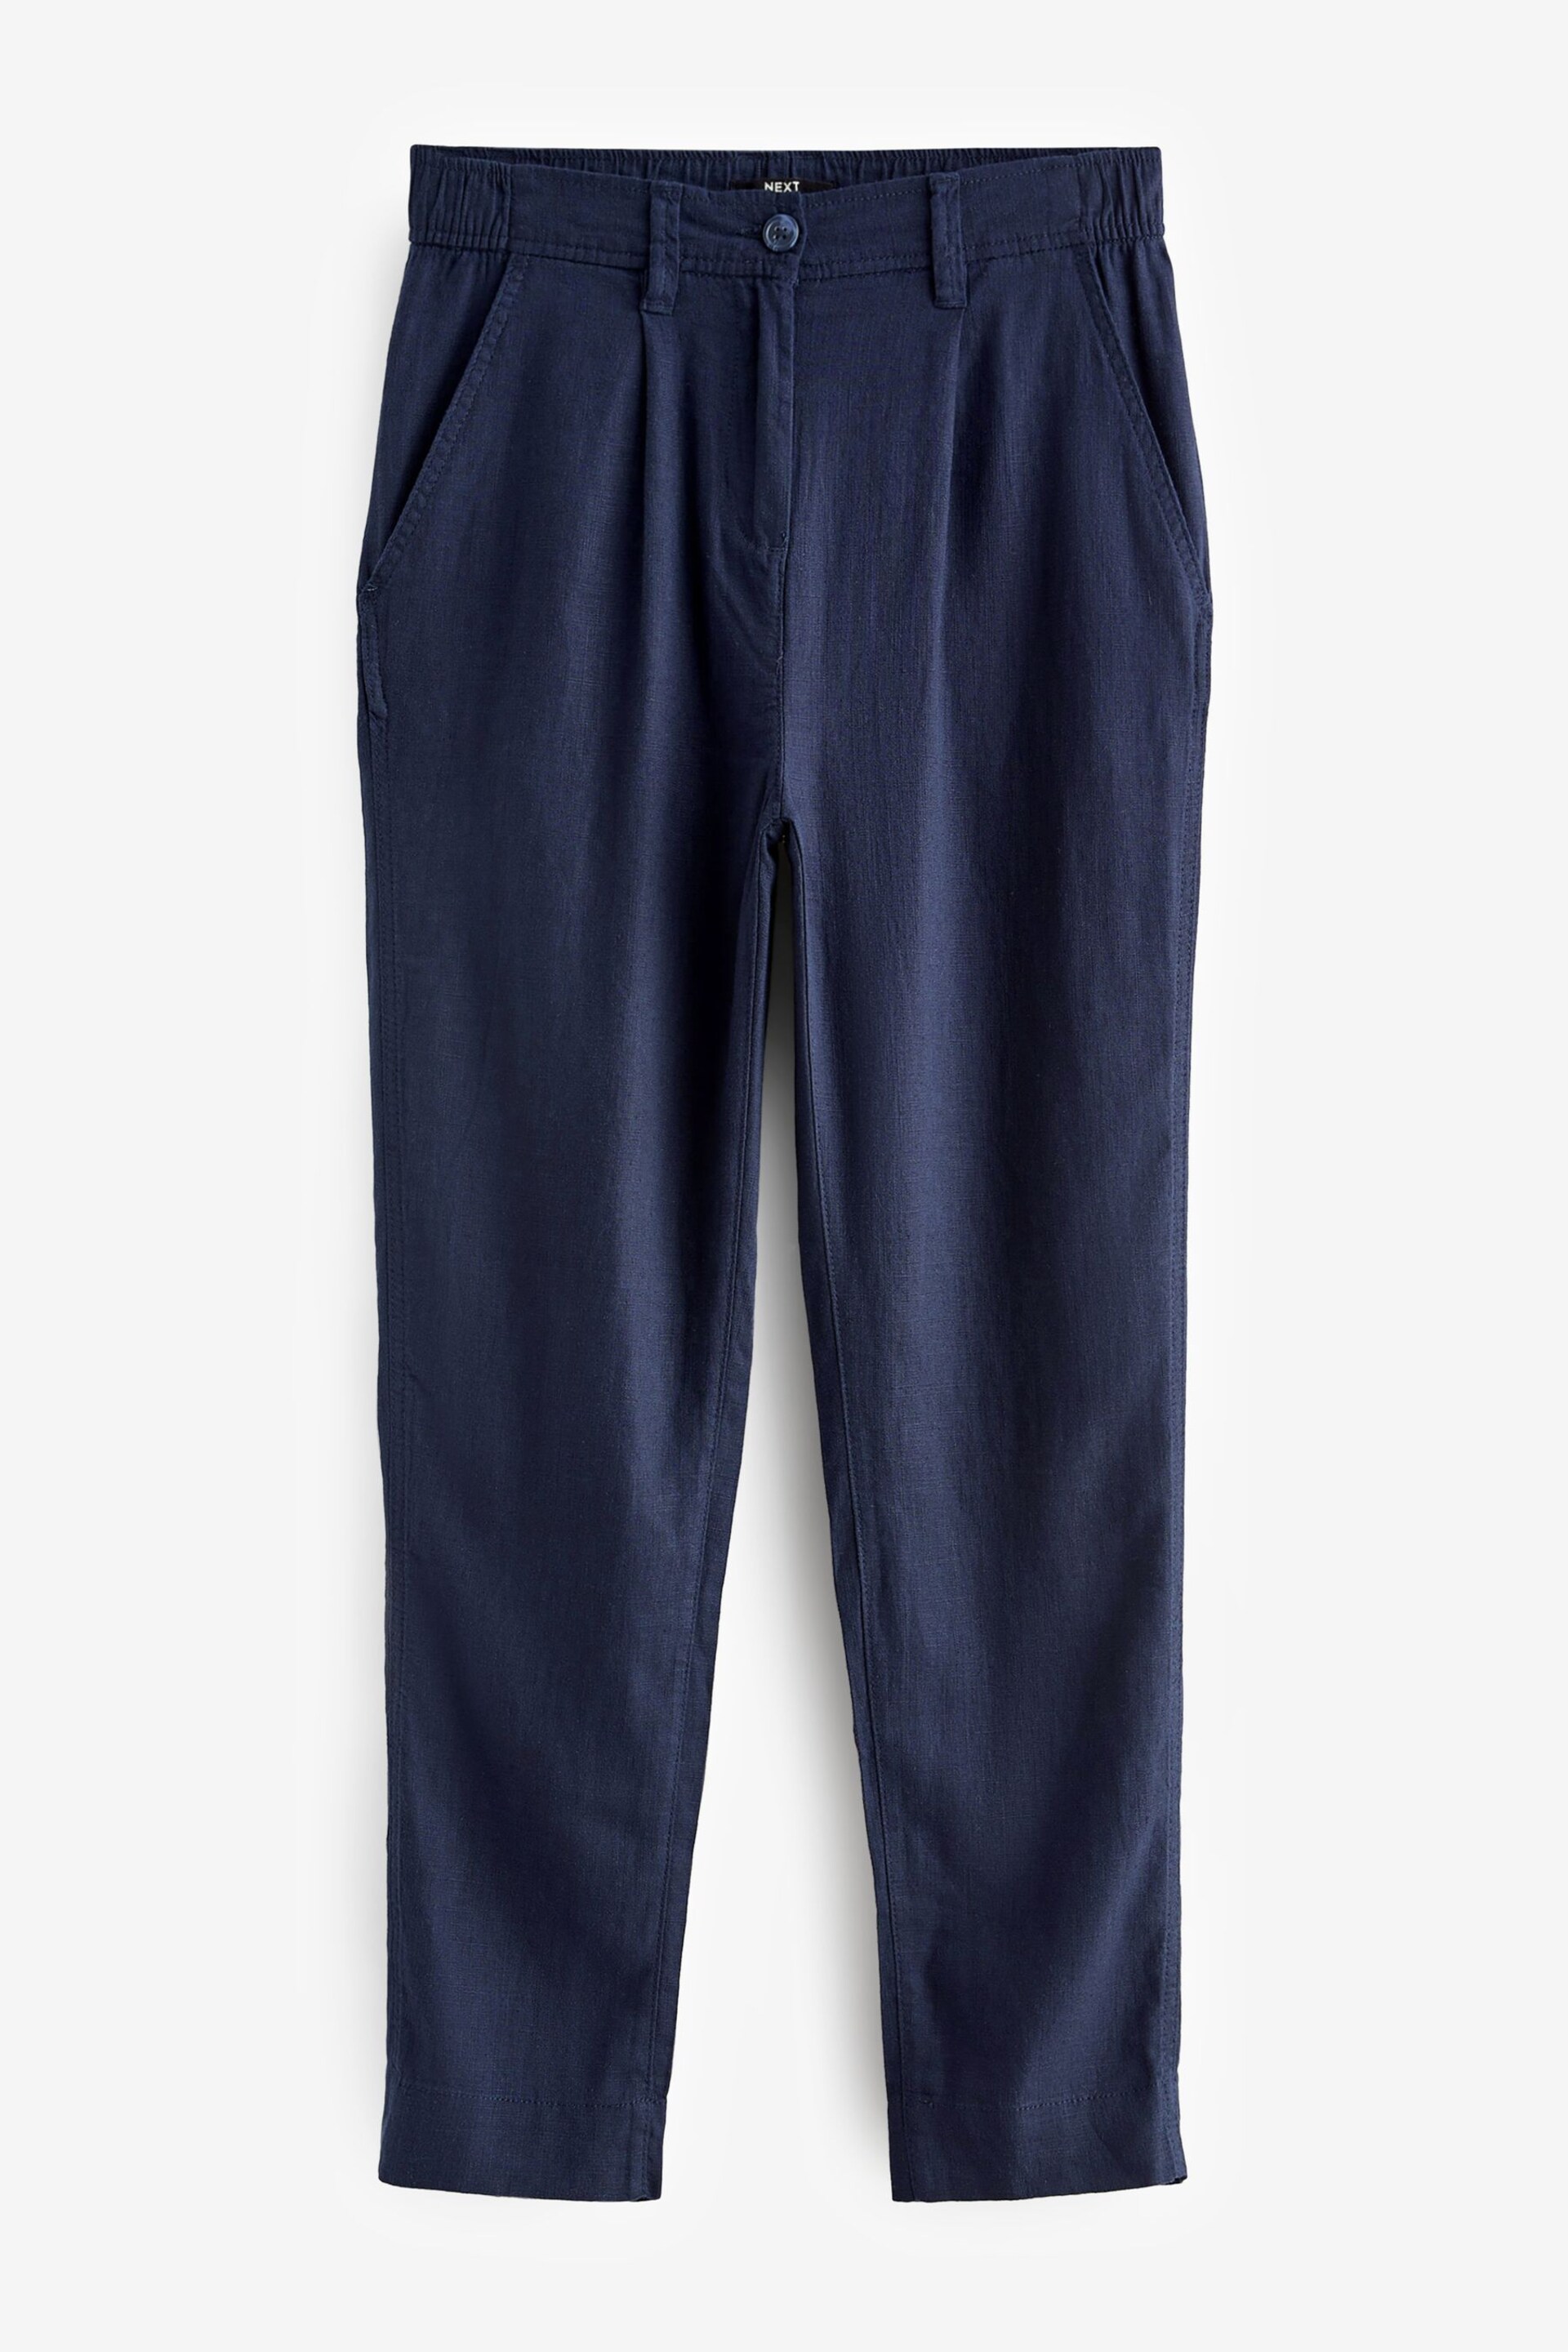 Black/Navy Blue Linen Blend Taper Trousers 2 Pack - Image 12 of 14